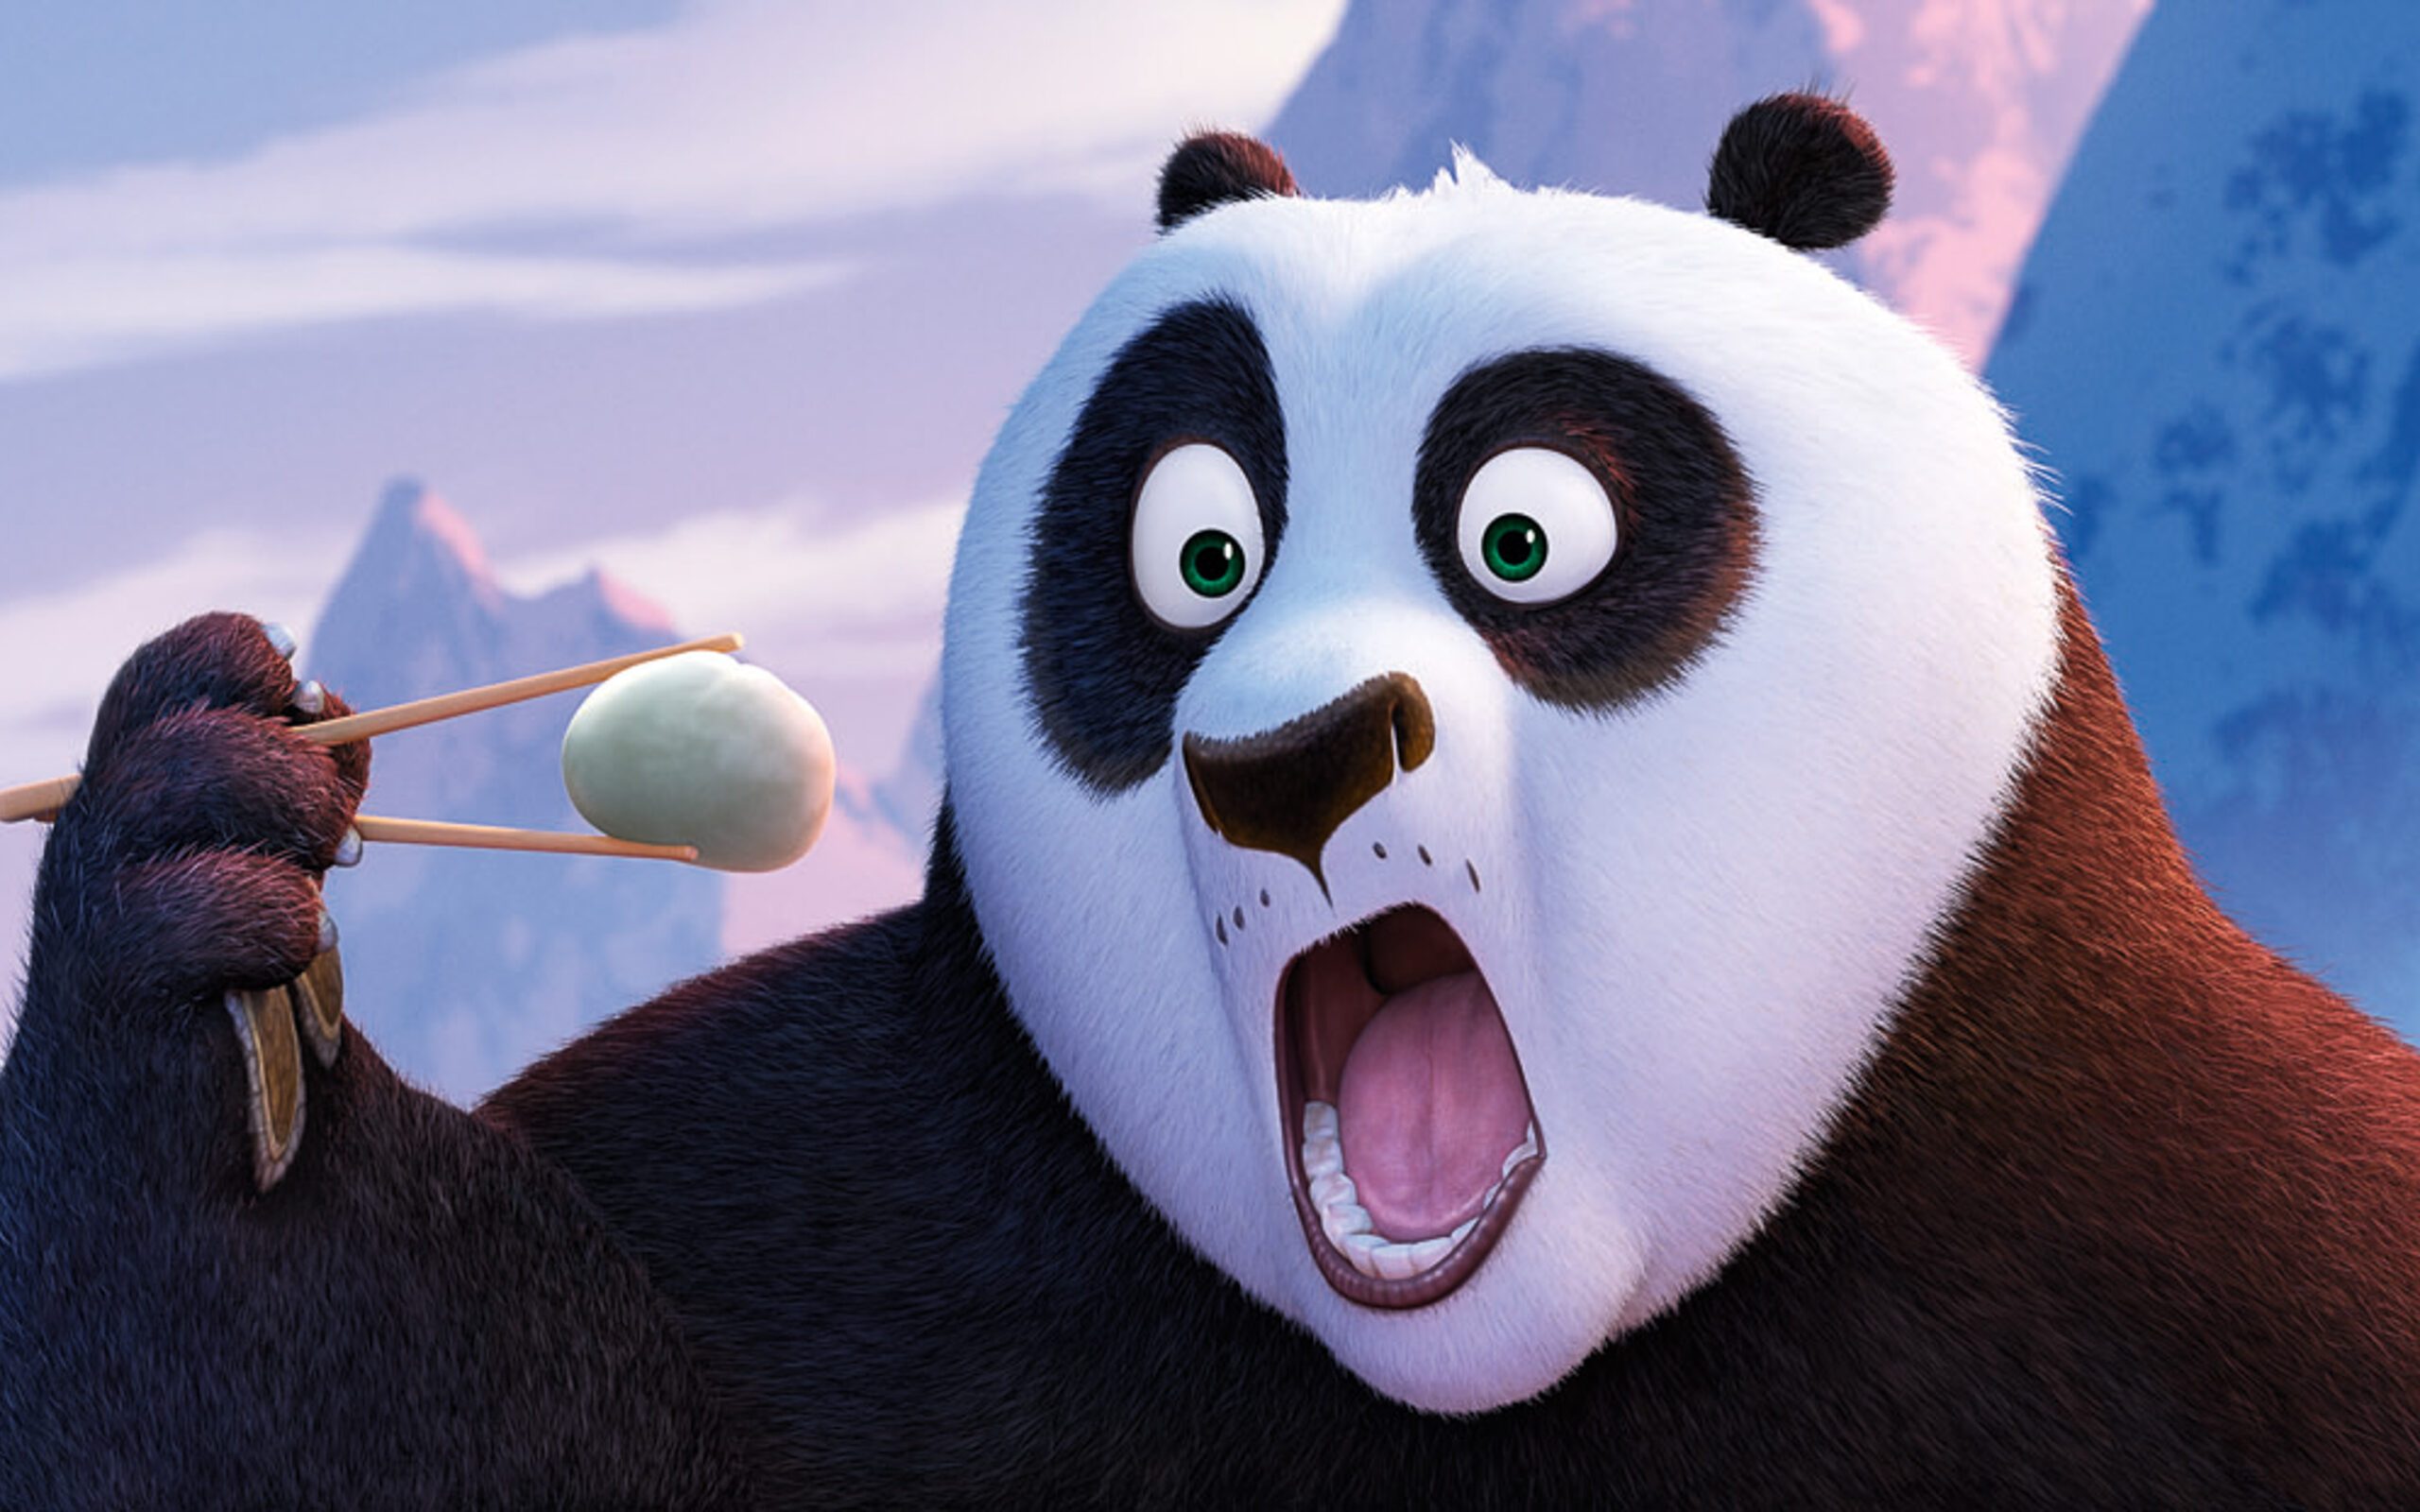 Comcast to buy DreamWorks Animation studio for $3.8 B